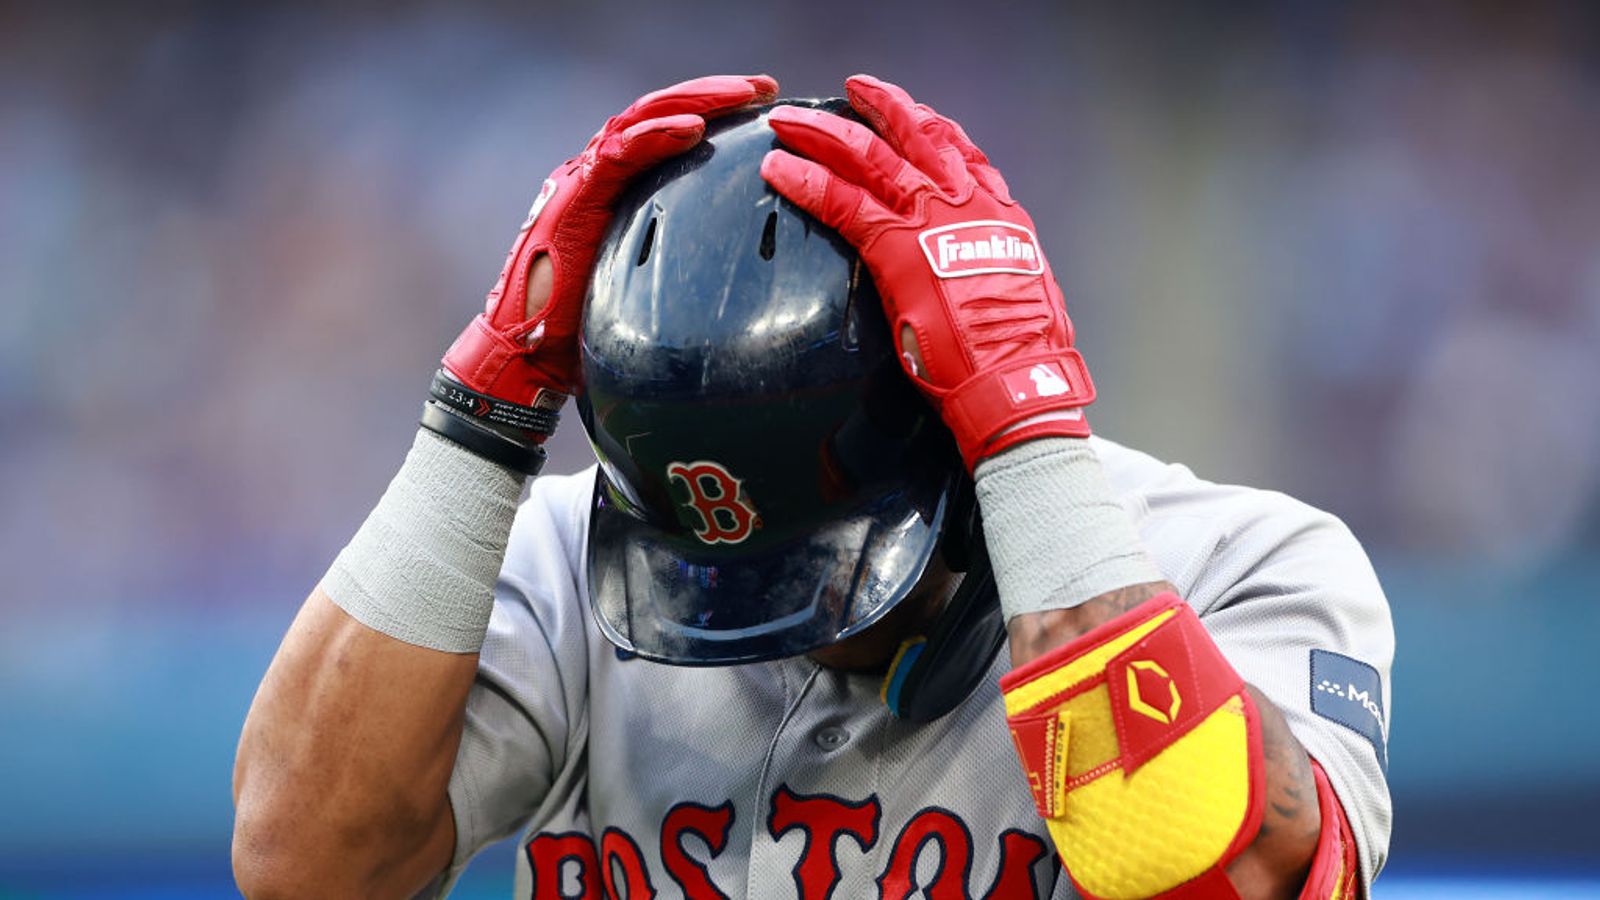 Masataka Yoshida's hit streak reaches 11 in Red Sox's walk-off win - The  Japan Times